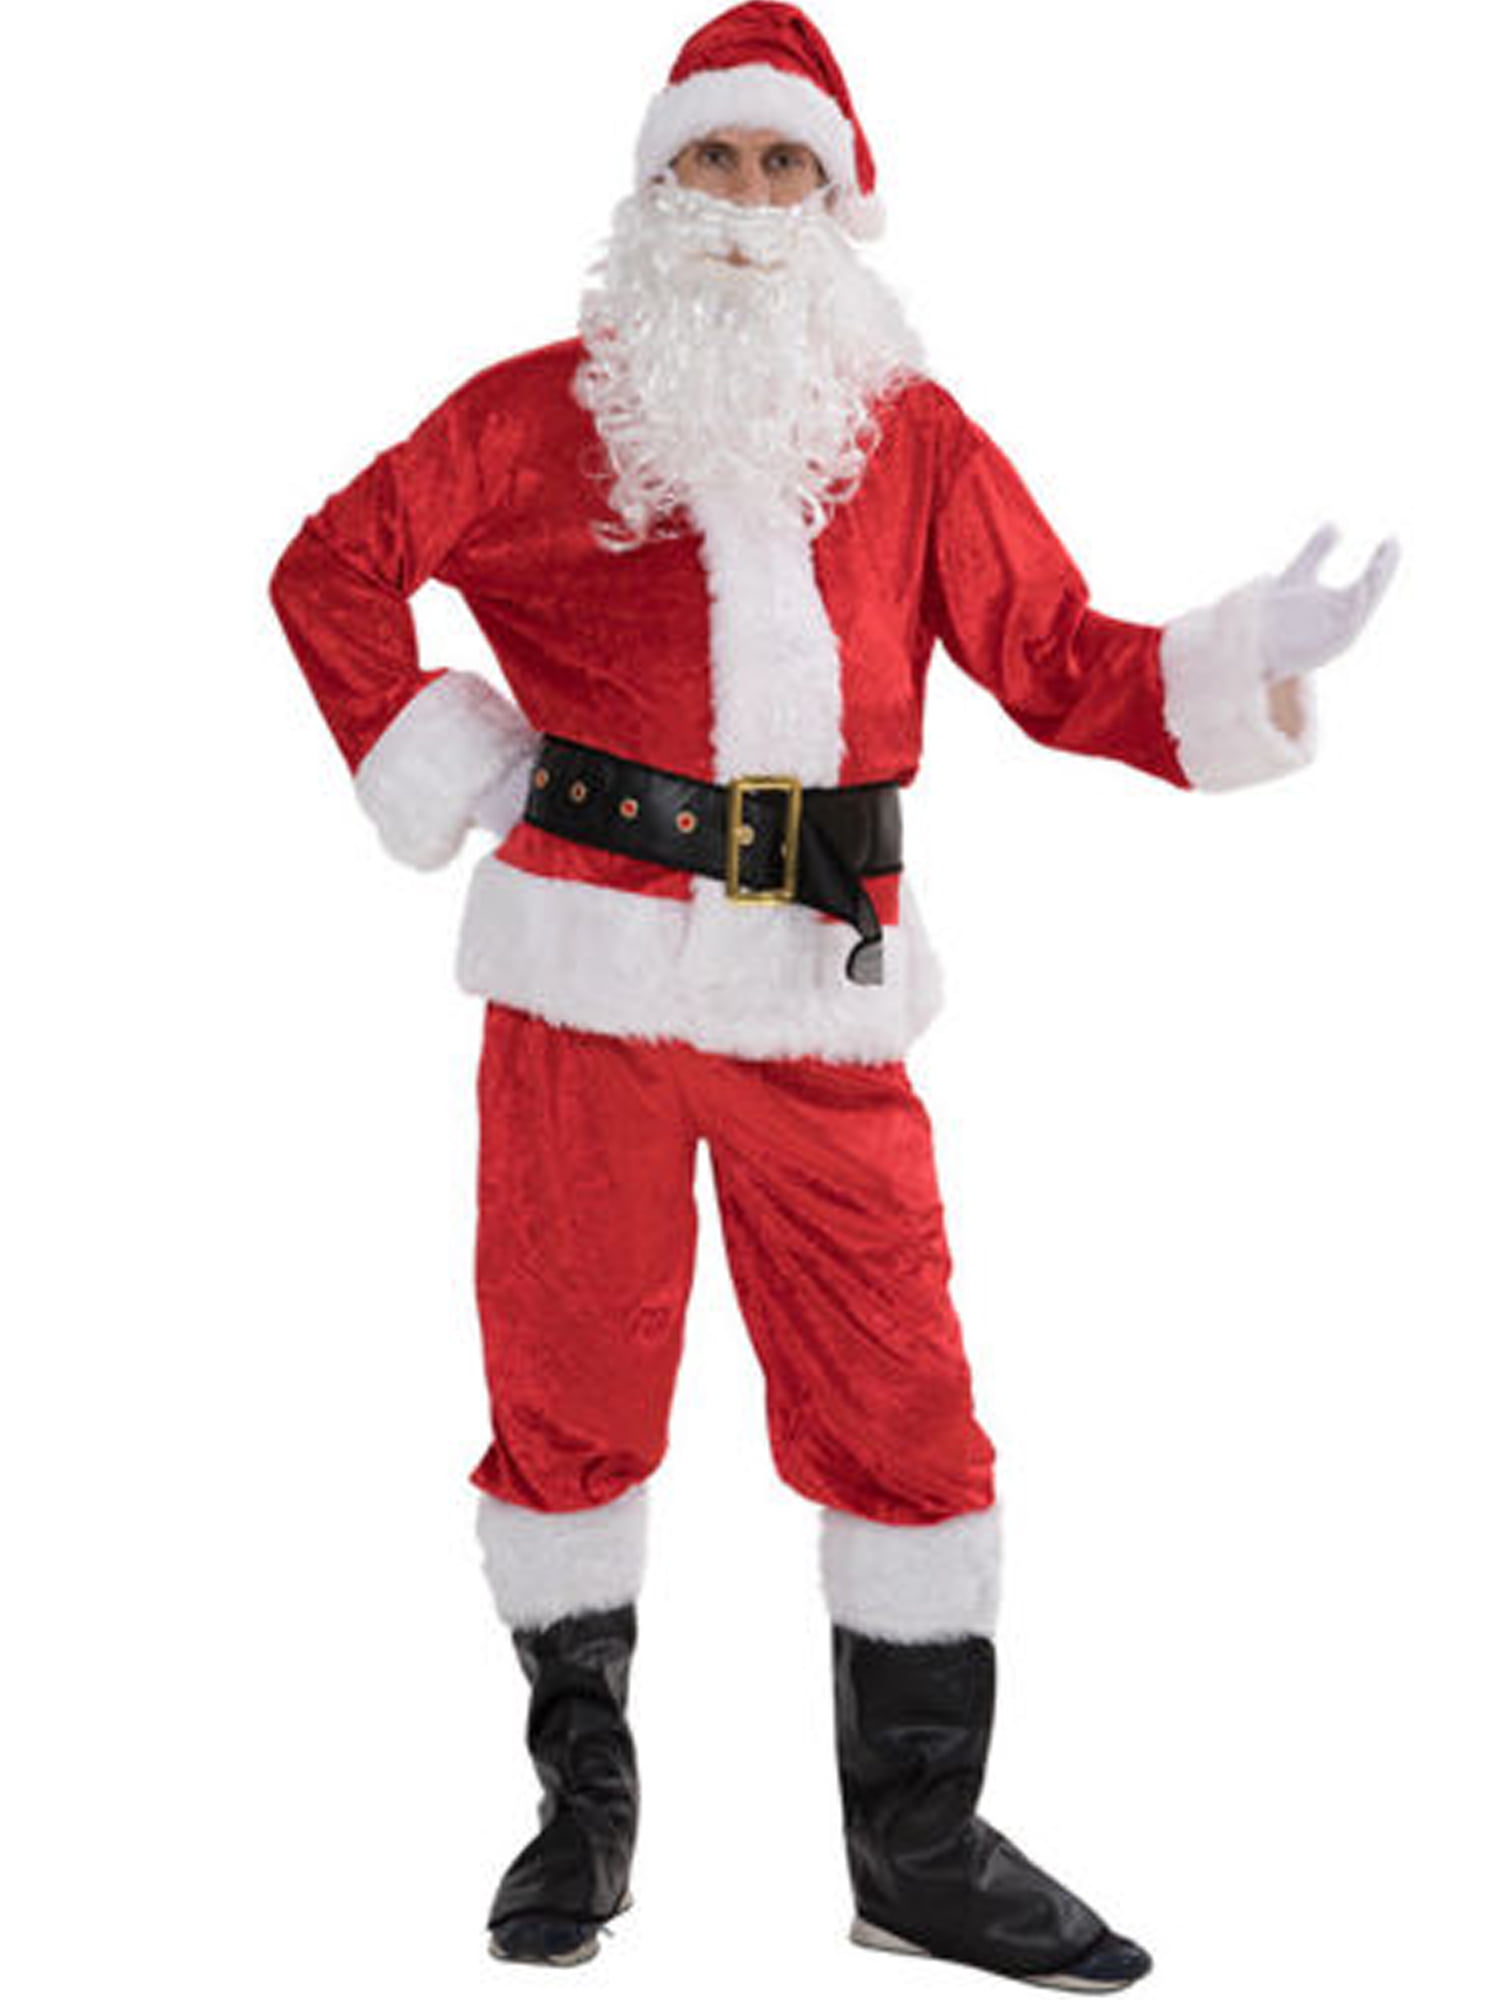 Santa Claus Costume Grinch Christmas Flannel Suit Mens Adult Fancy Dress Outfit 